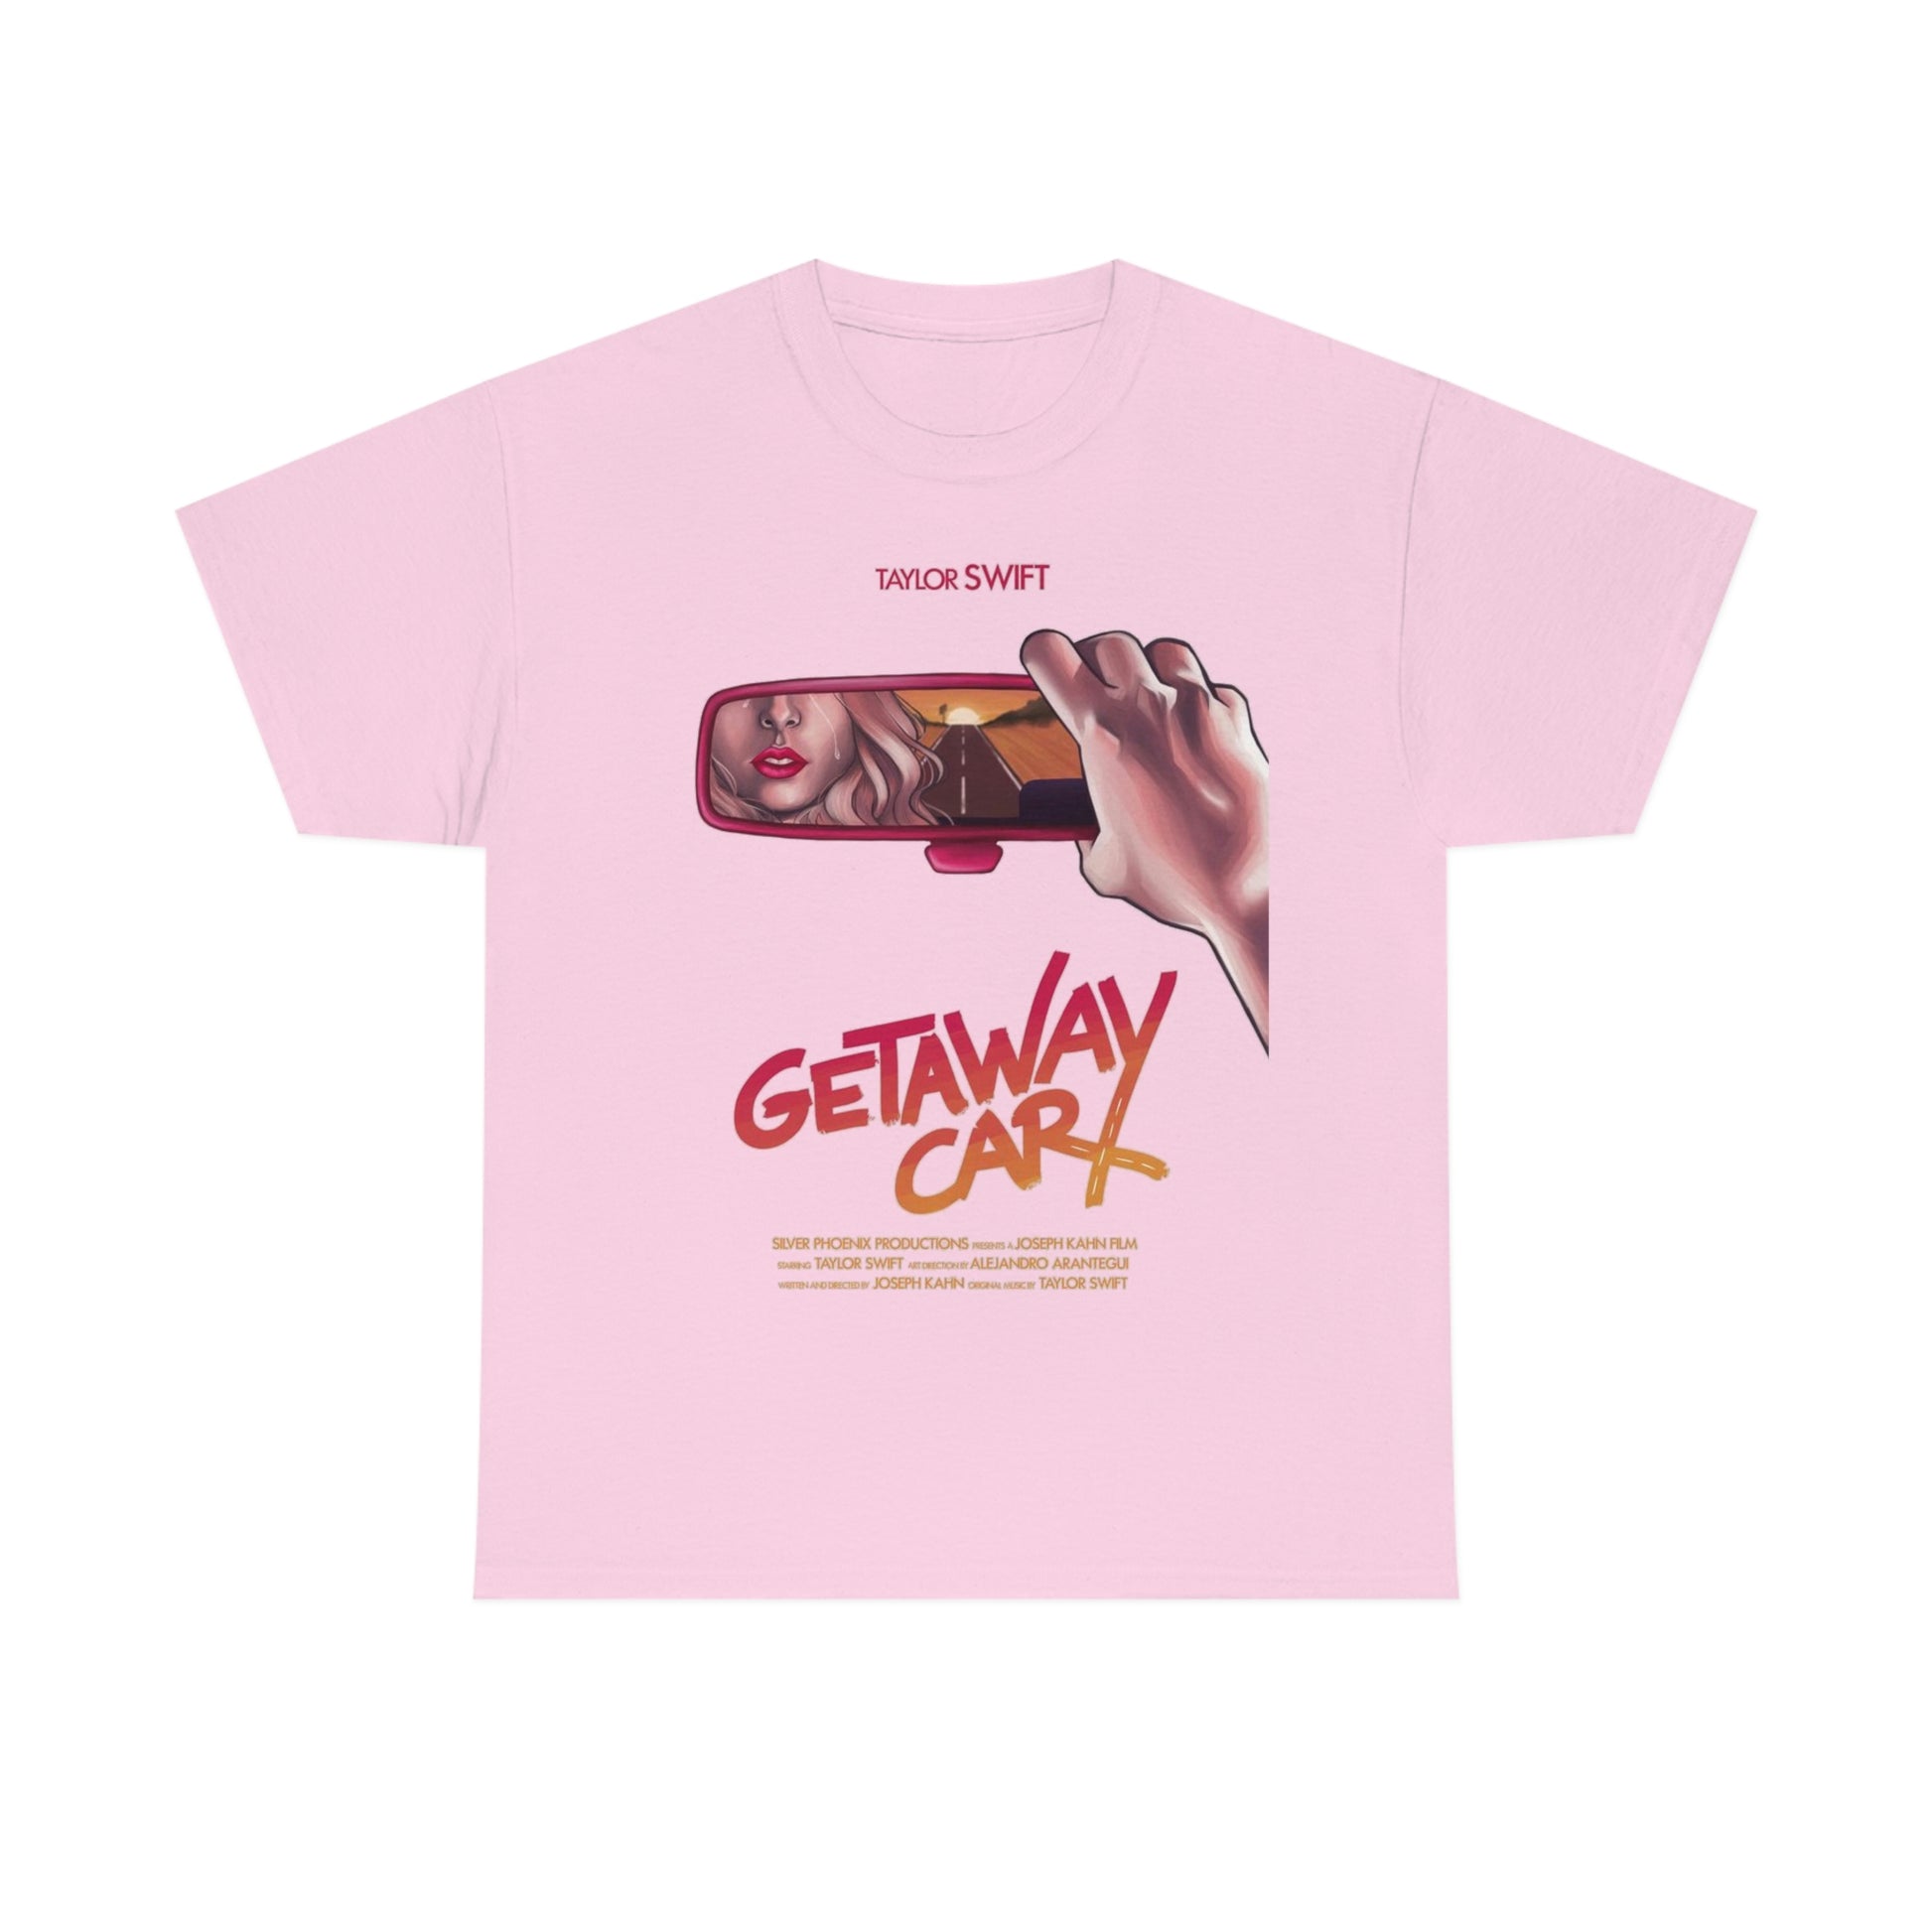 Taylor Swift Getaway Car Iron on Patch – The Posh Pink Pagoda